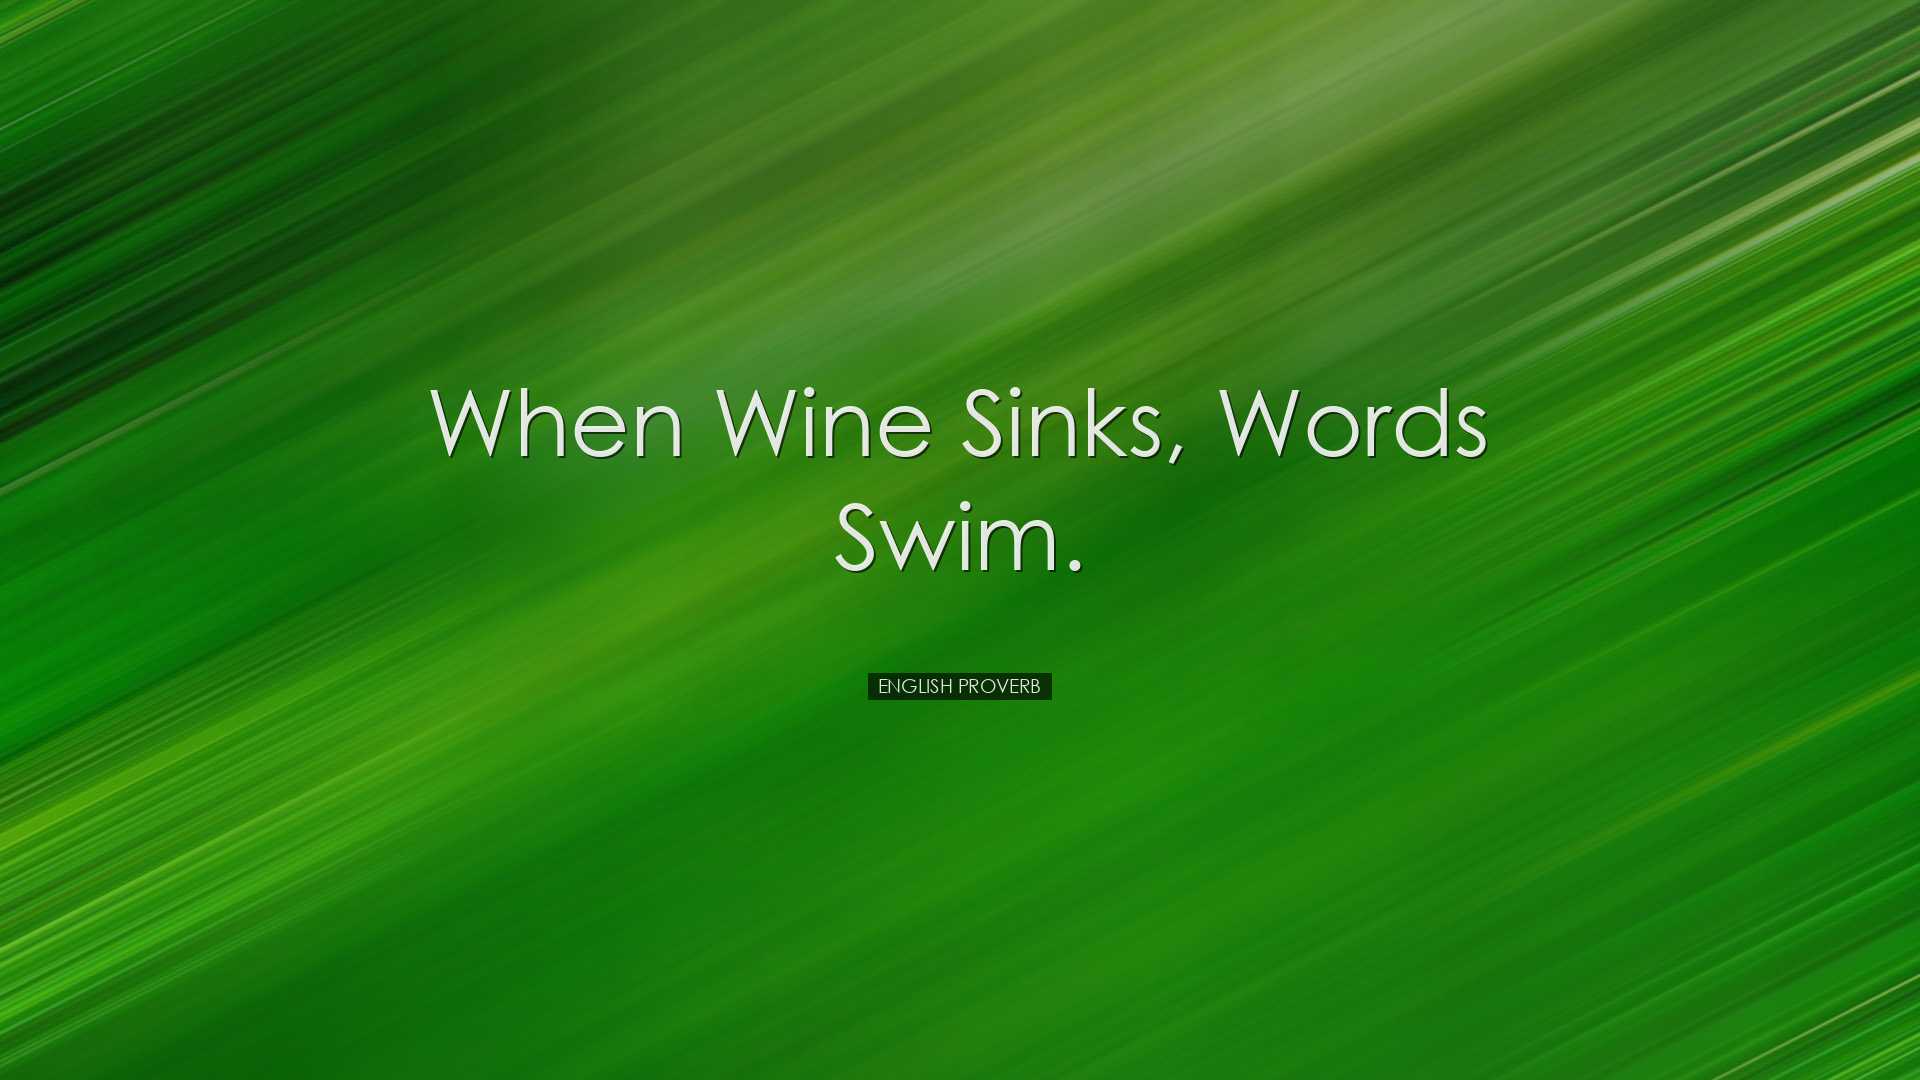 When wine sinks, words swim. - English proverb